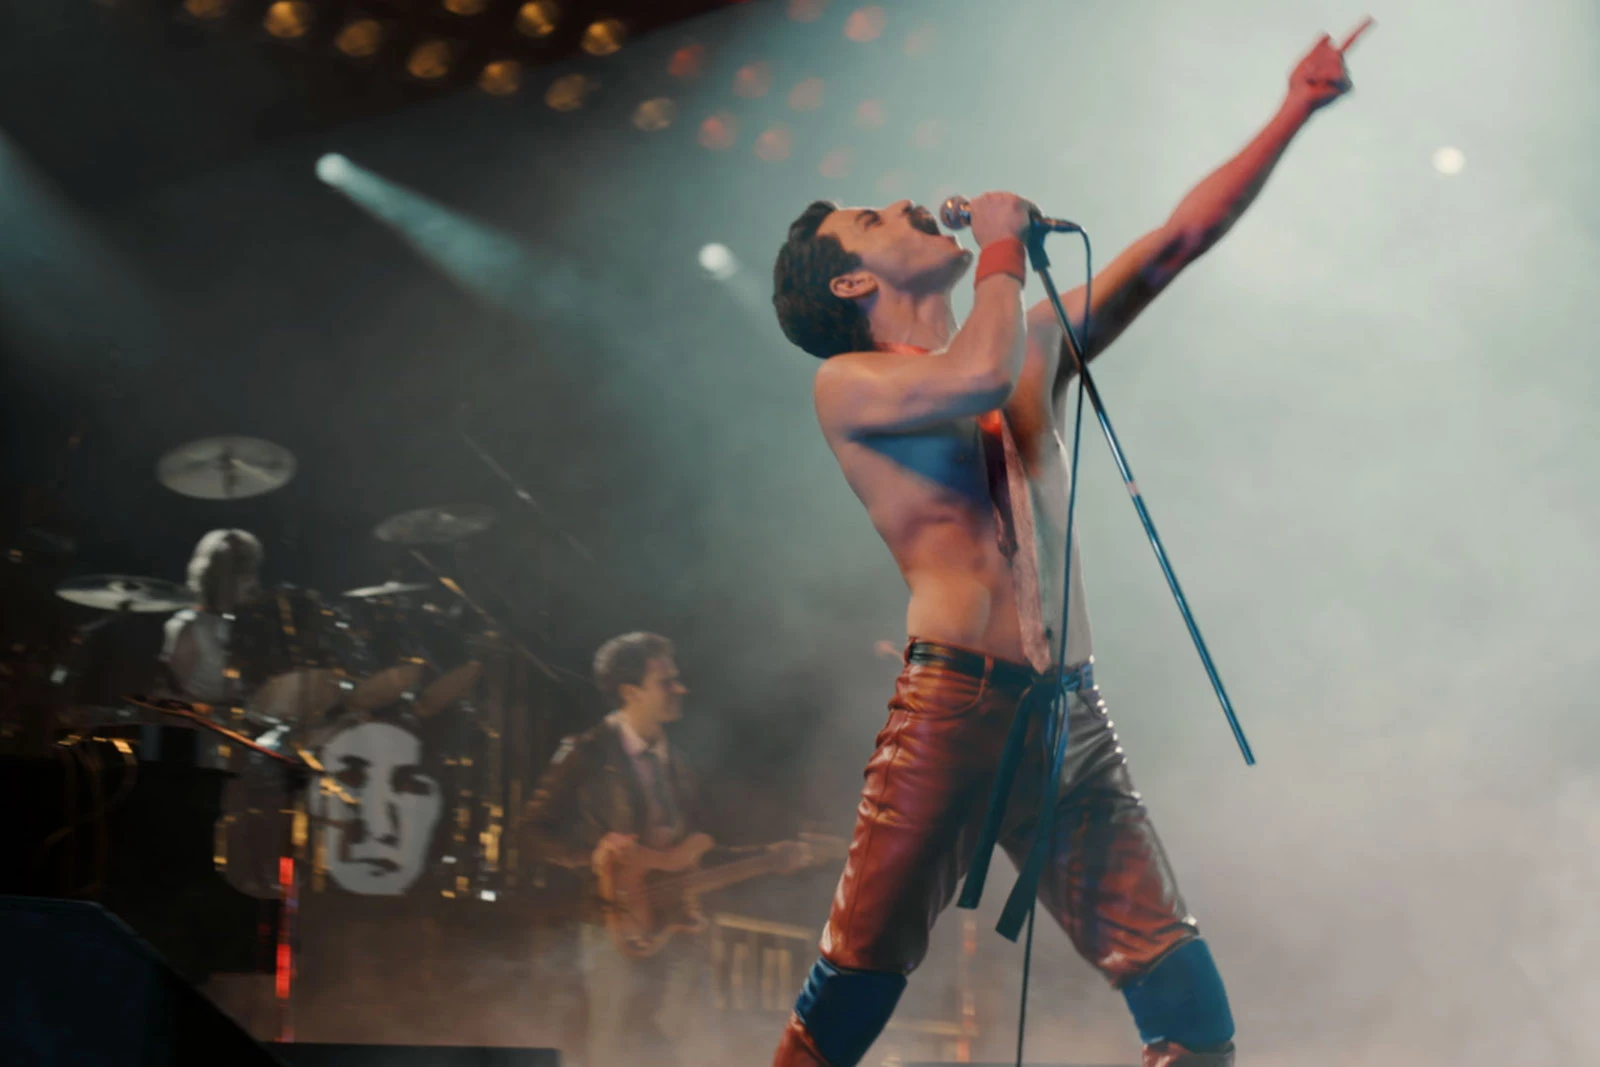 Bohemian Rhapsody download the new version